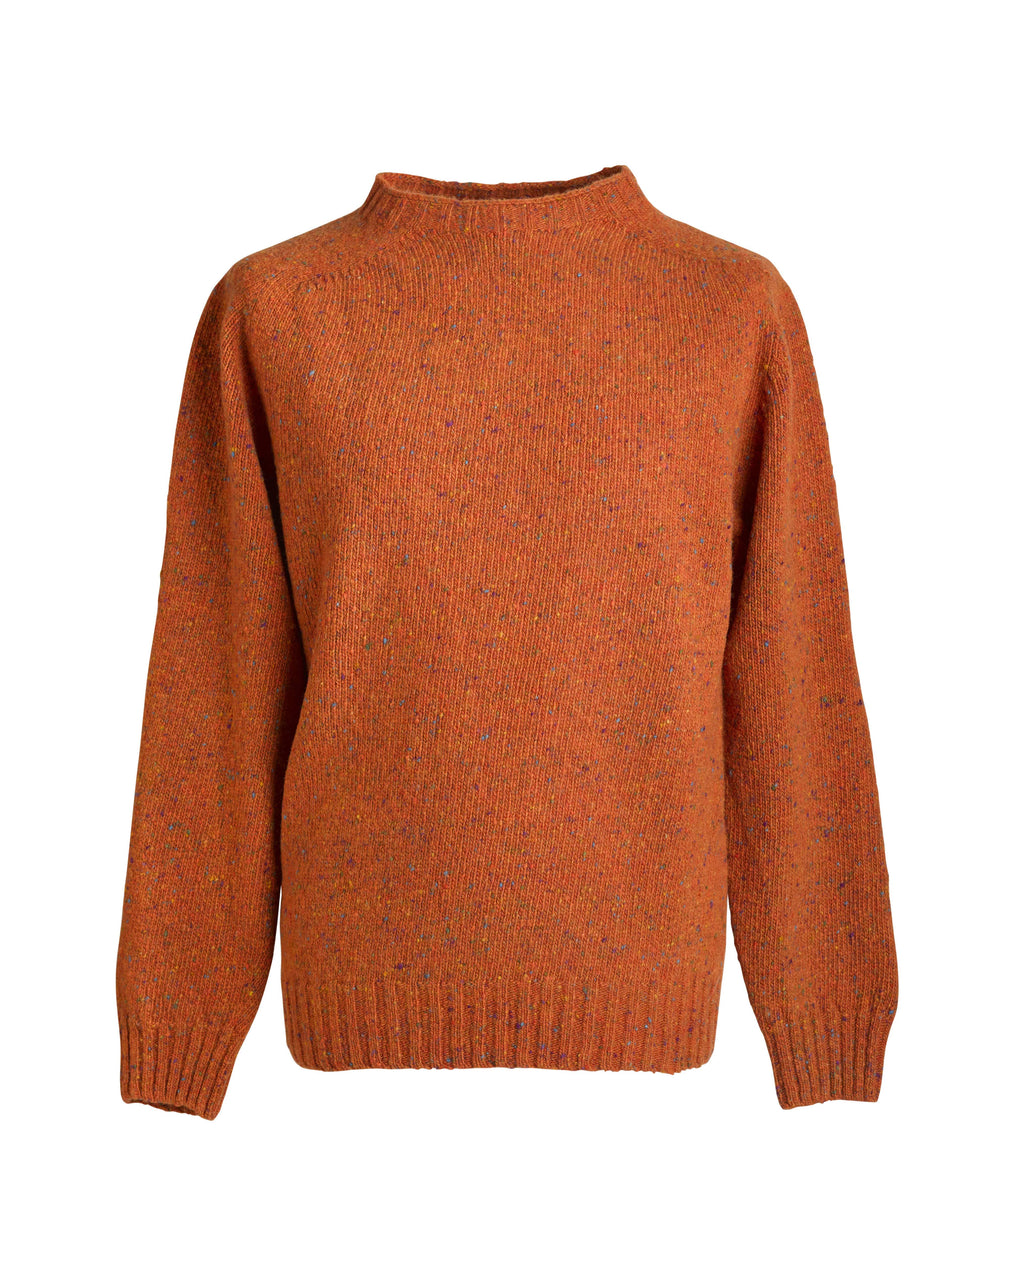 Donegal yarn crewneck sweater Autumn